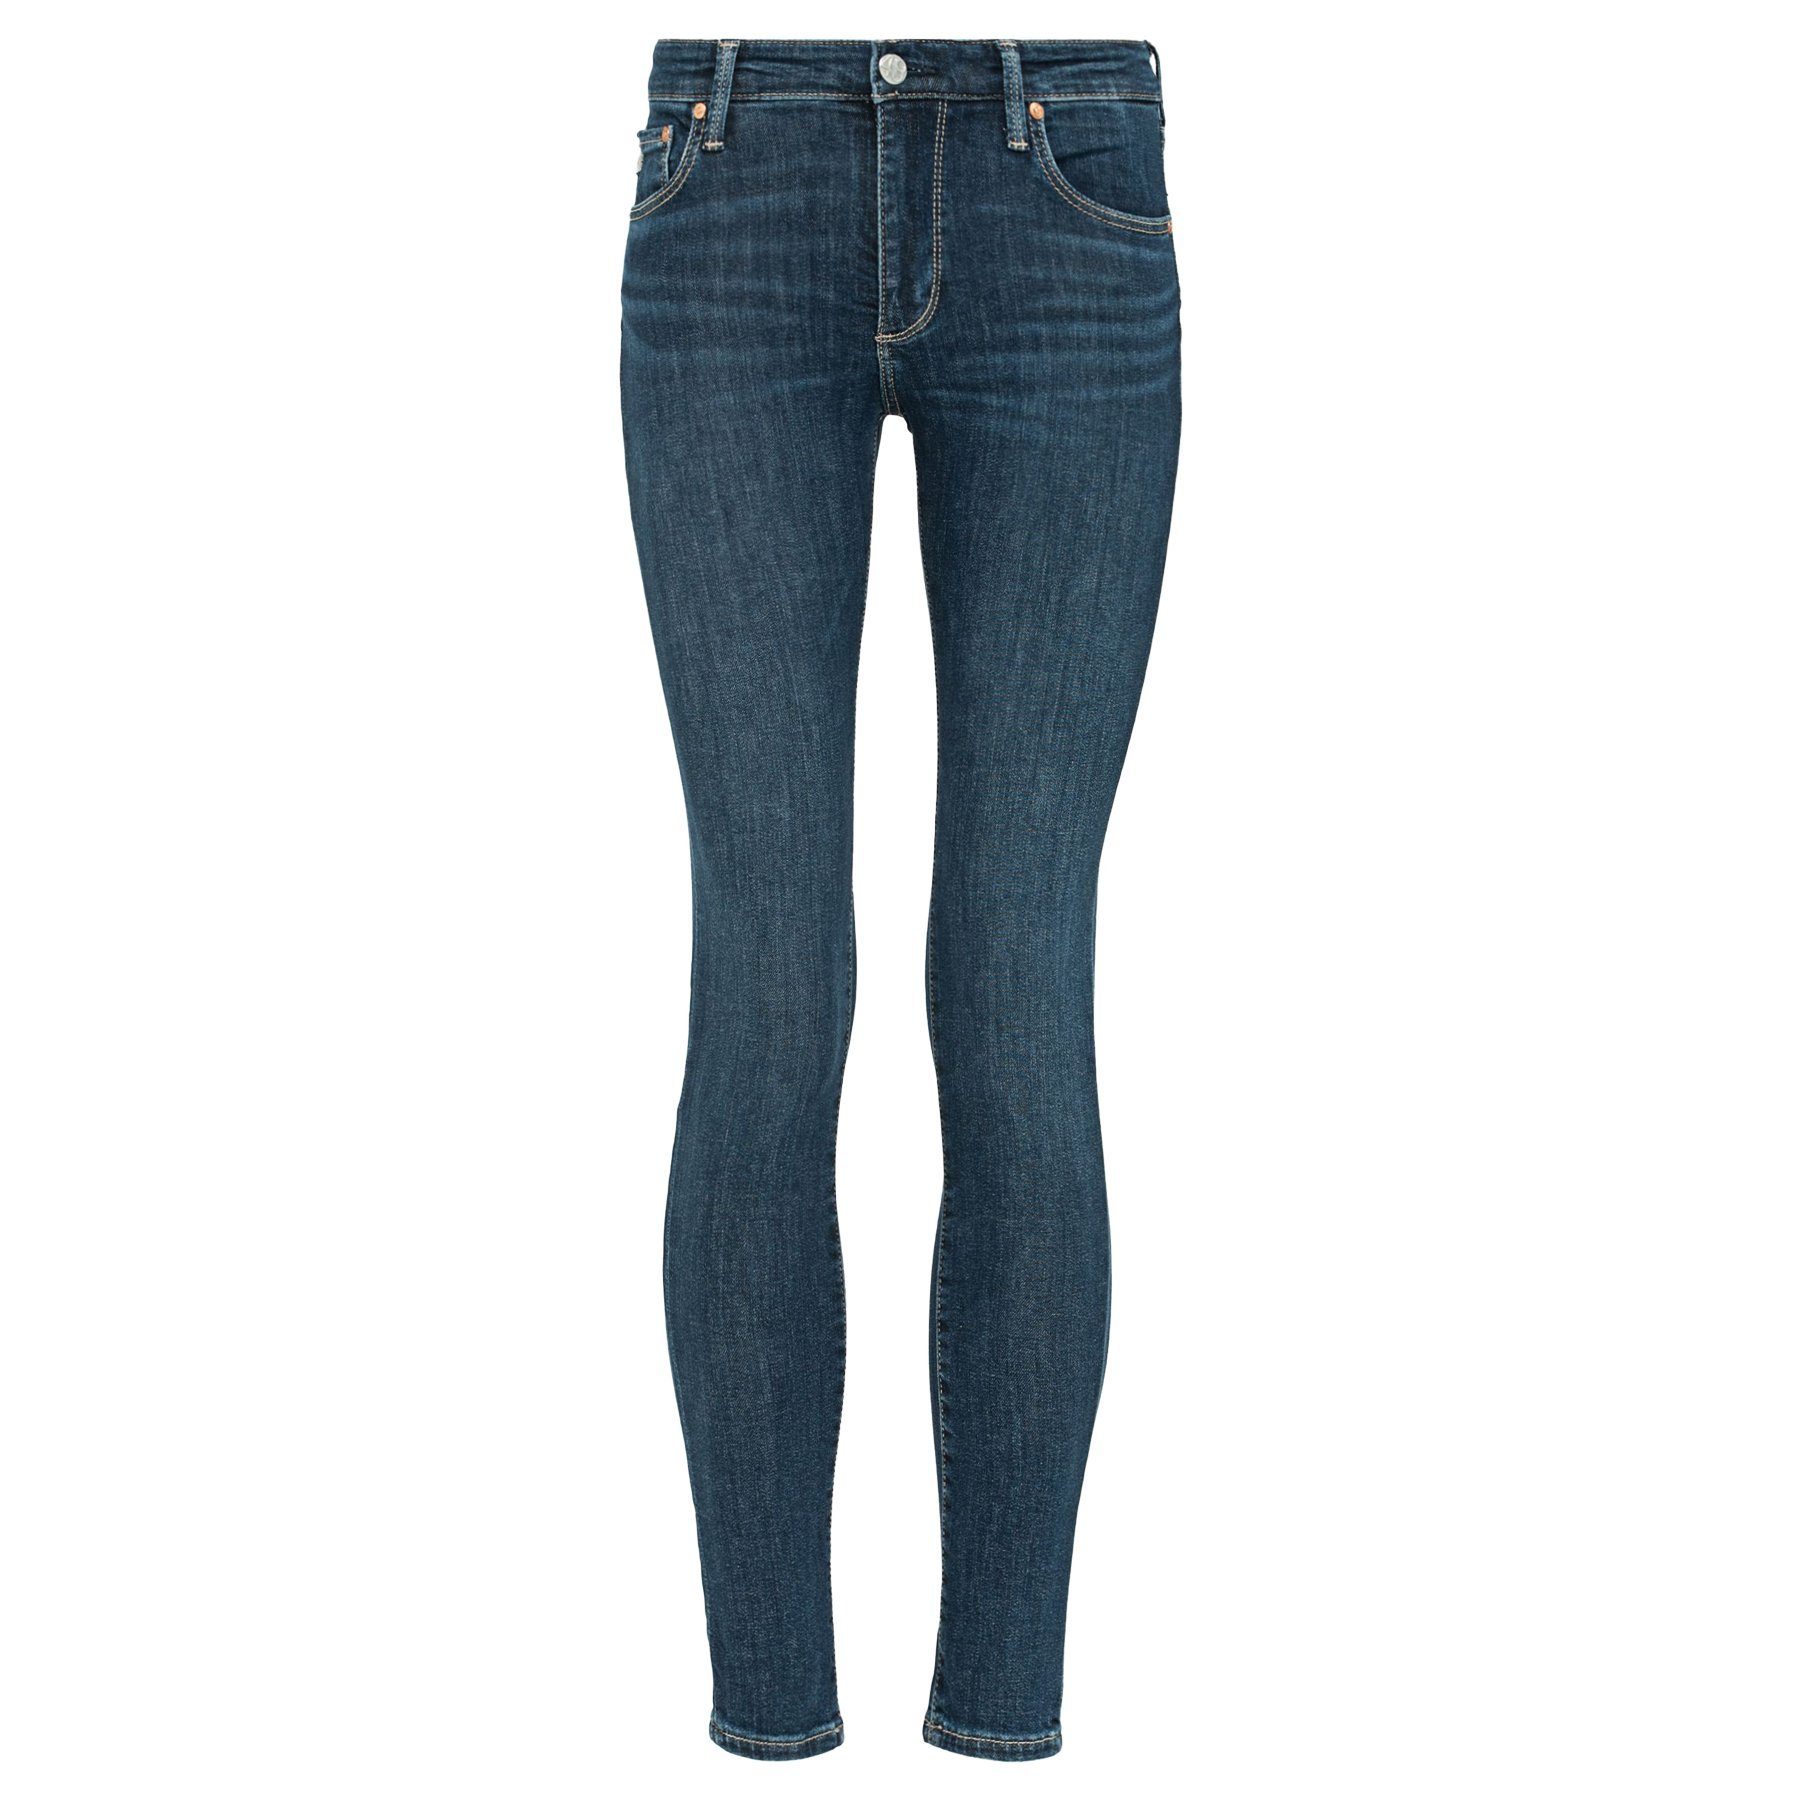 ADRIANO Baumwolle aus LEGGING 7/8-Jeans GOLDSCHMIED ANKLE Jeans